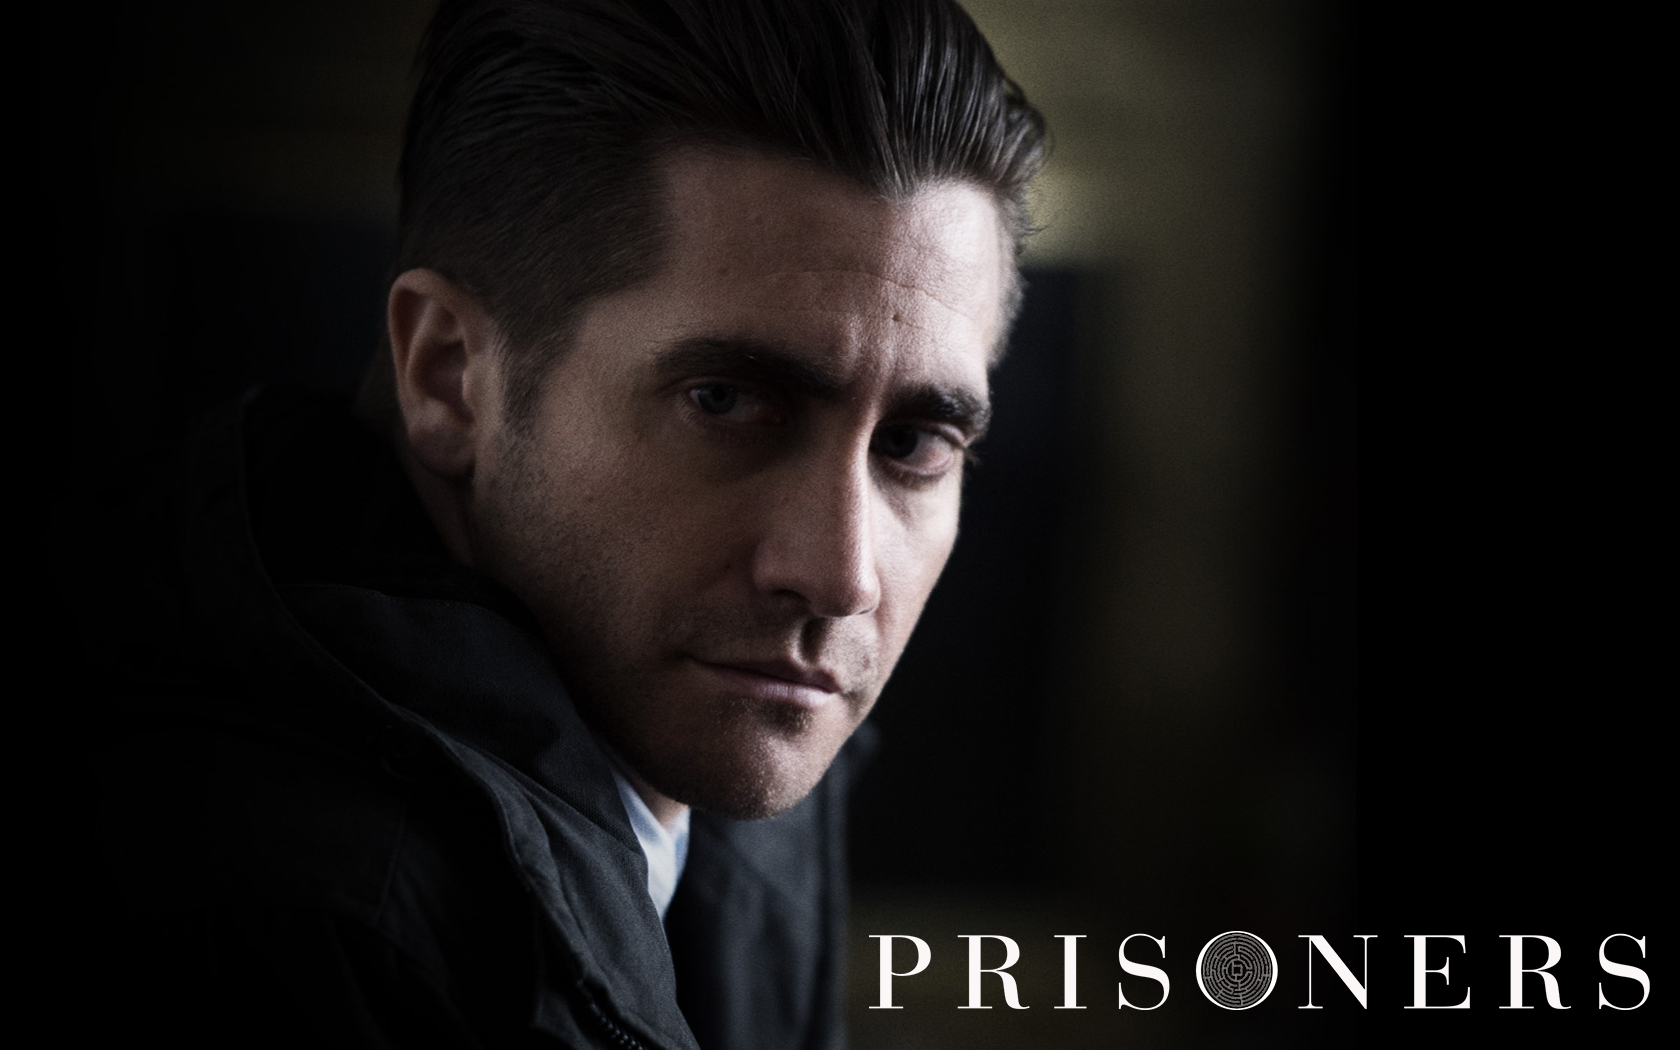 Jake Gyllenhaal Prisoners HD Wallpaper Background Image